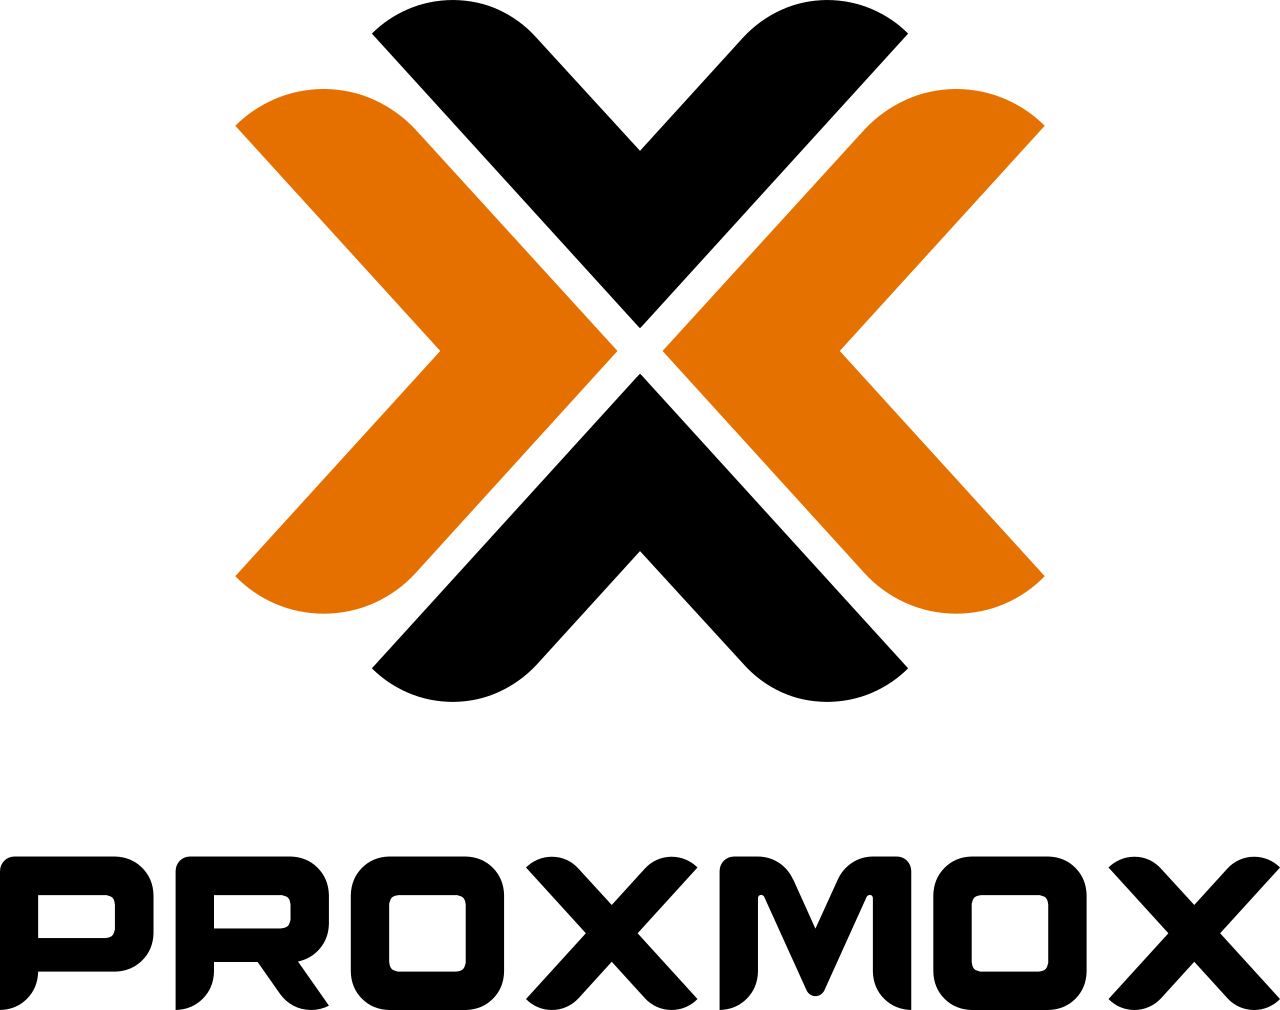 Proxmox logo